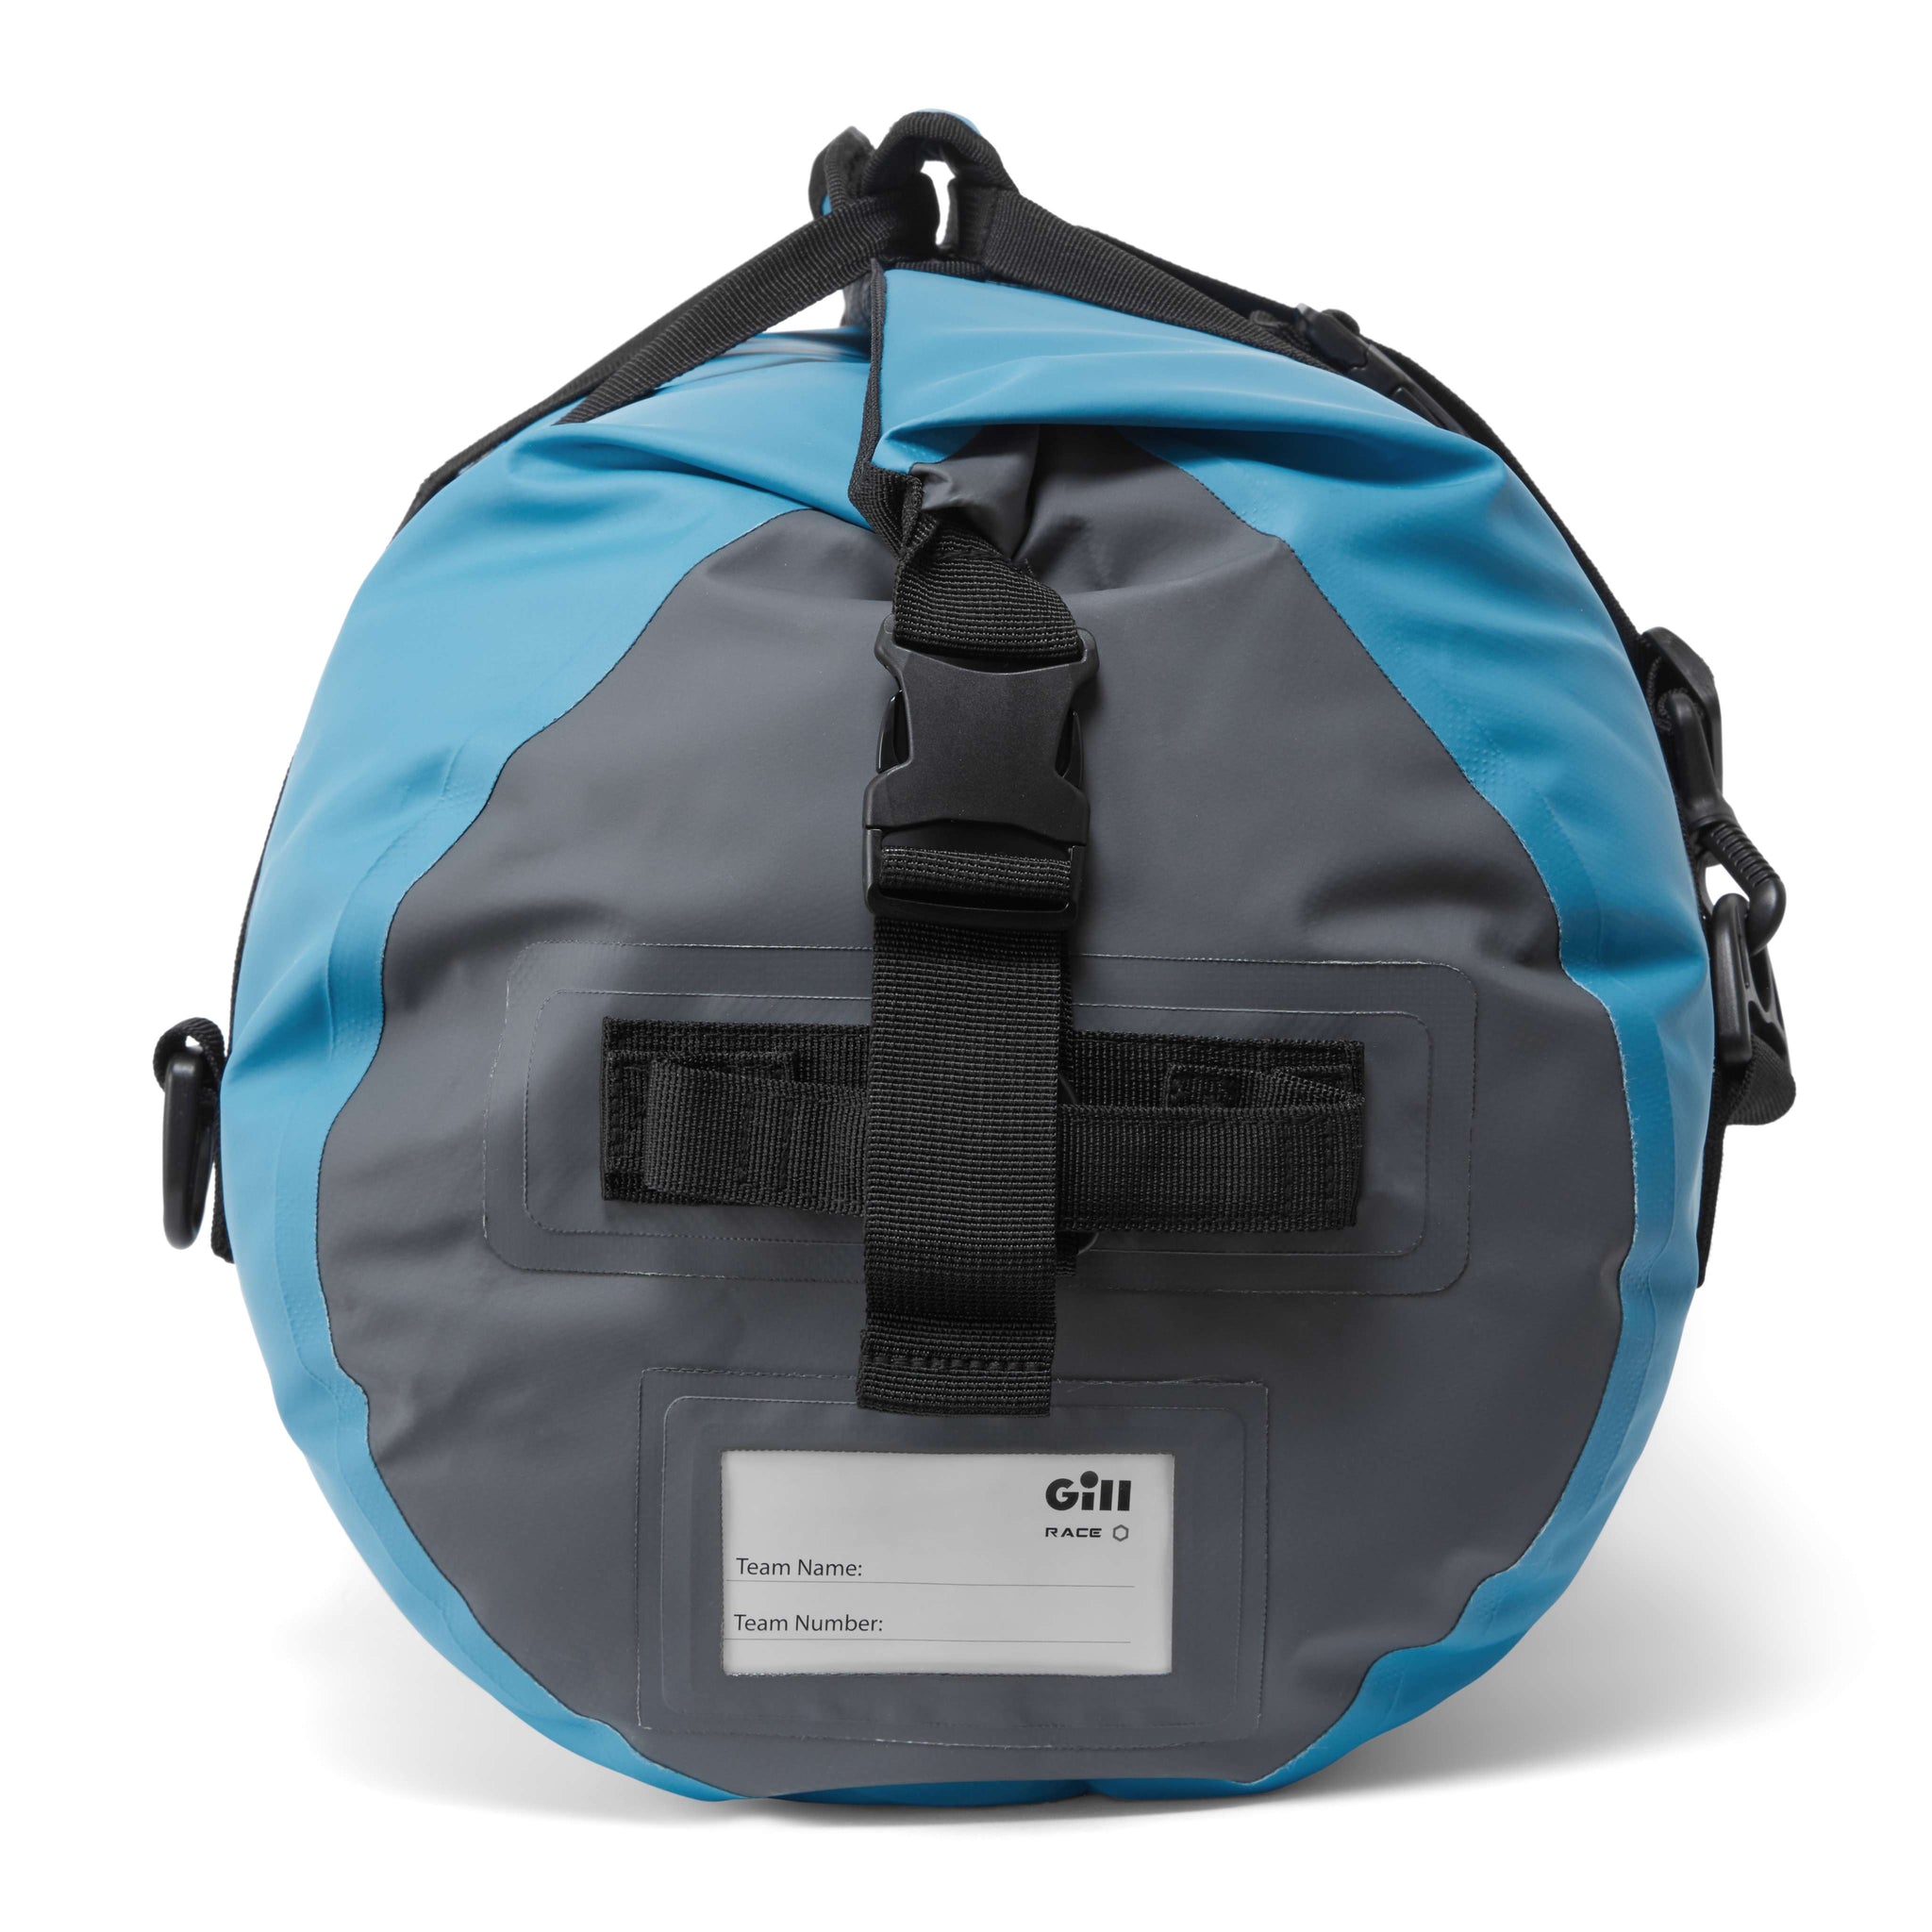 Gill - Voyager Duffel Bag 30L